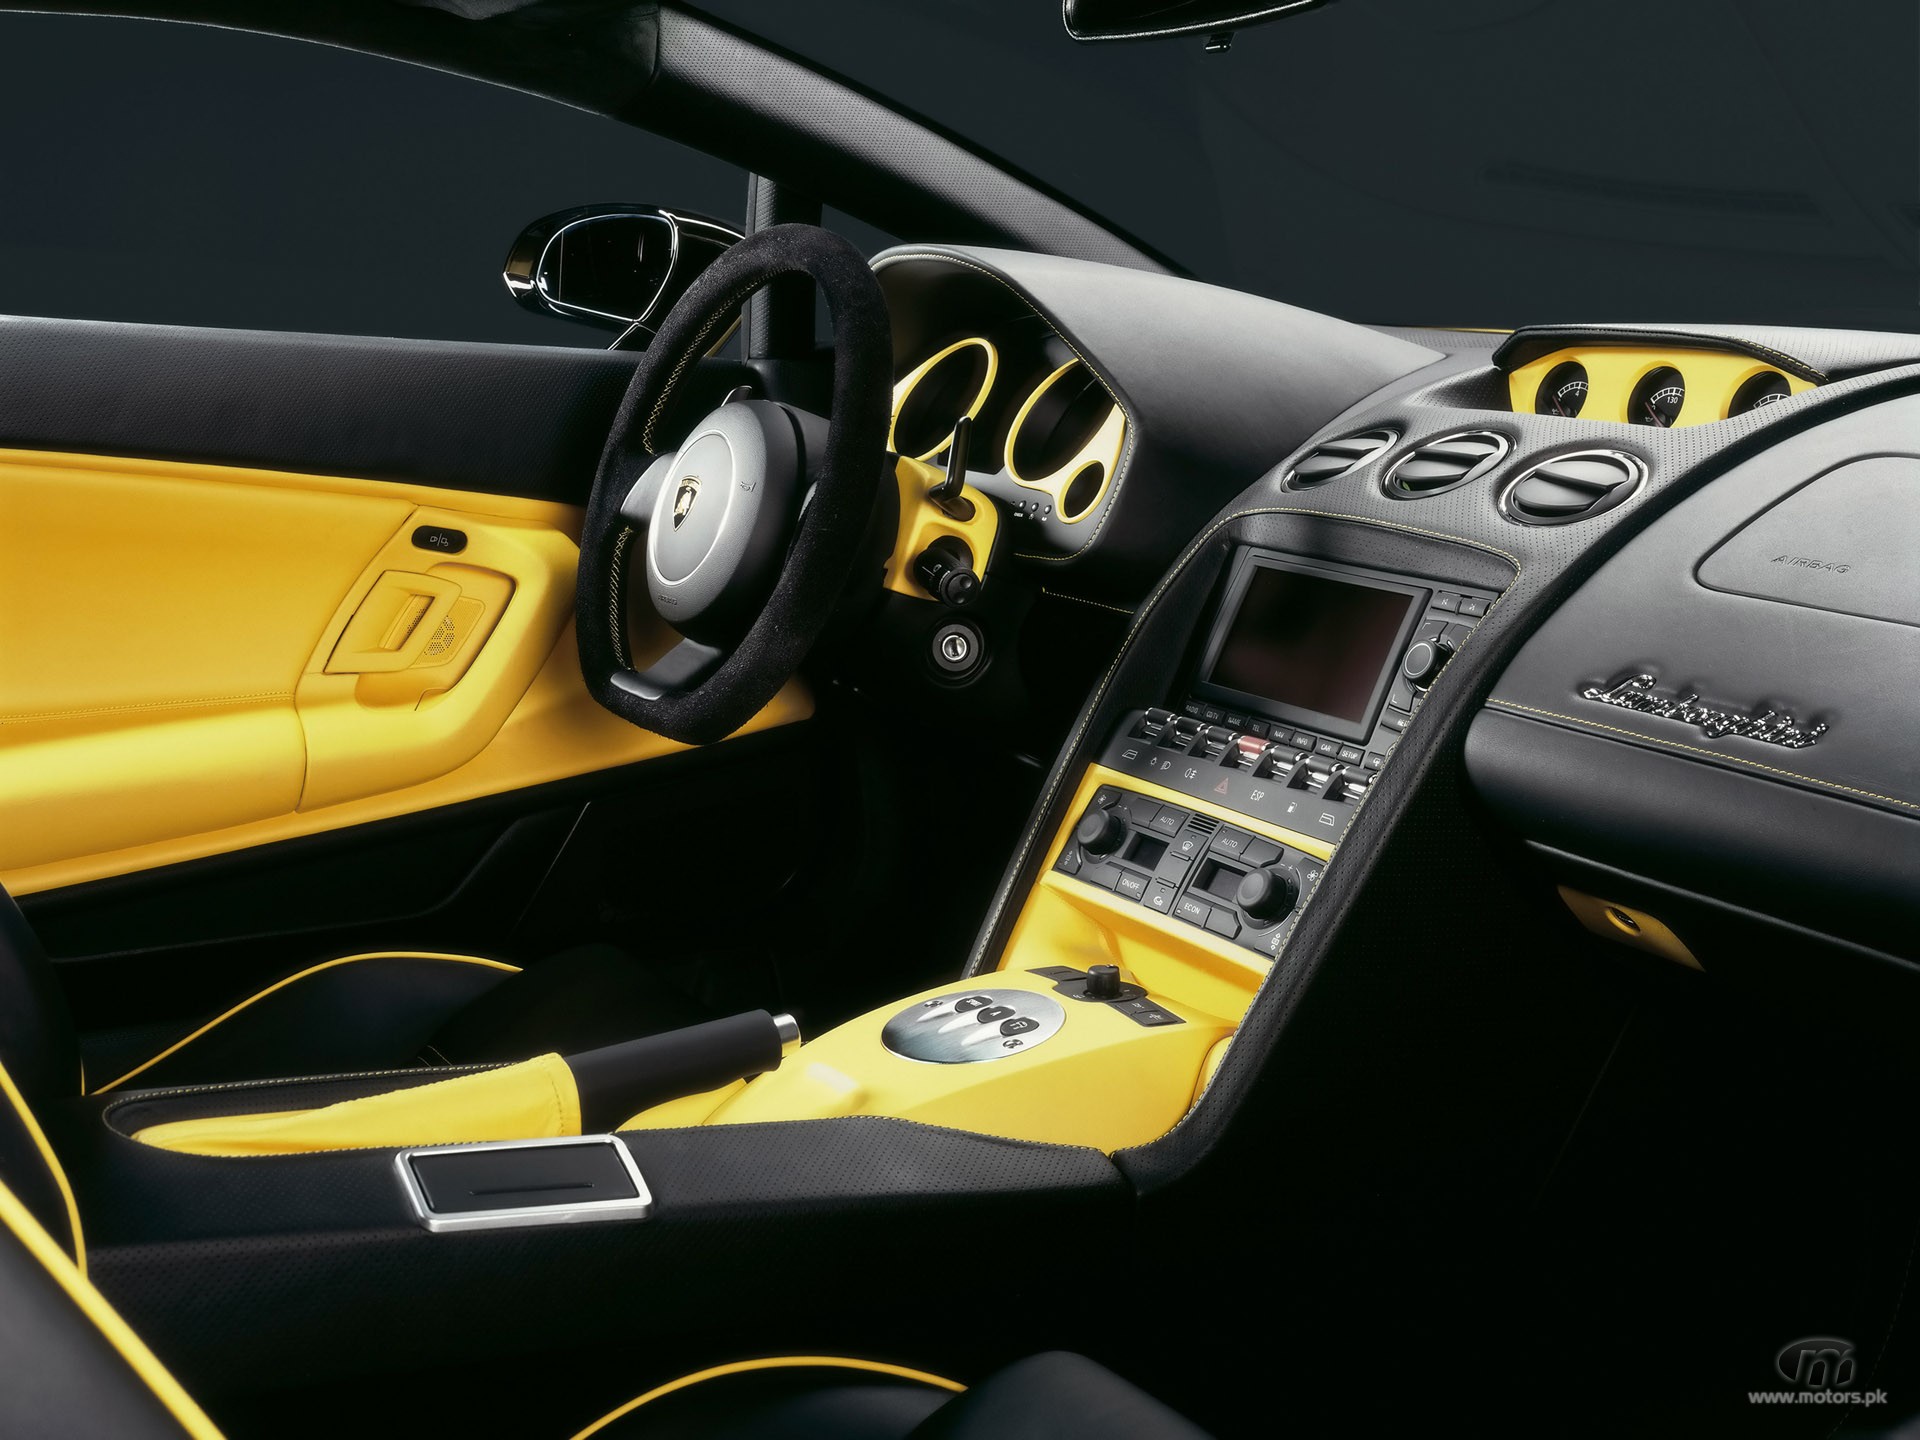 Lamborgini interior view muti yellow color